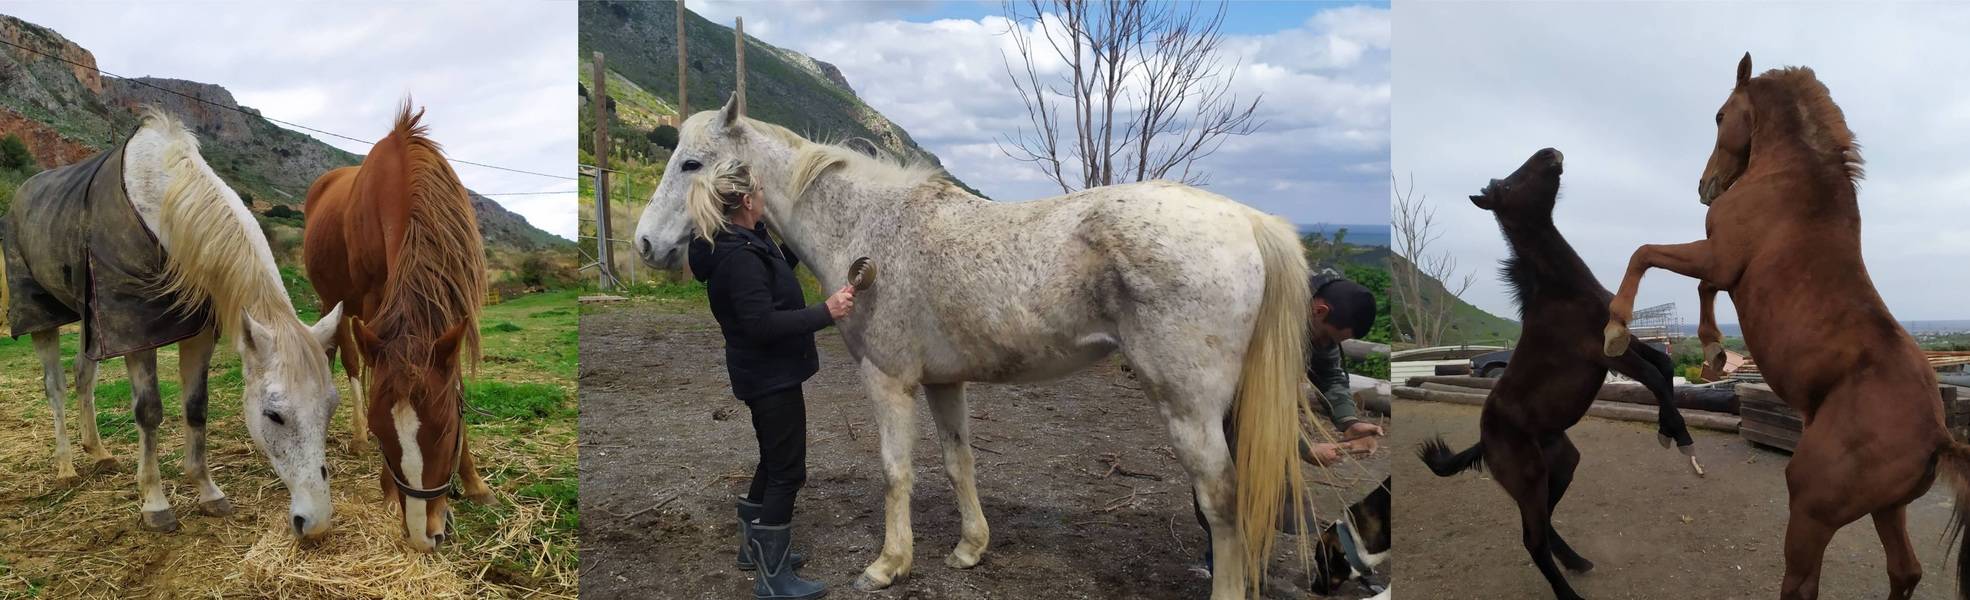 Horse welfare project on Crete